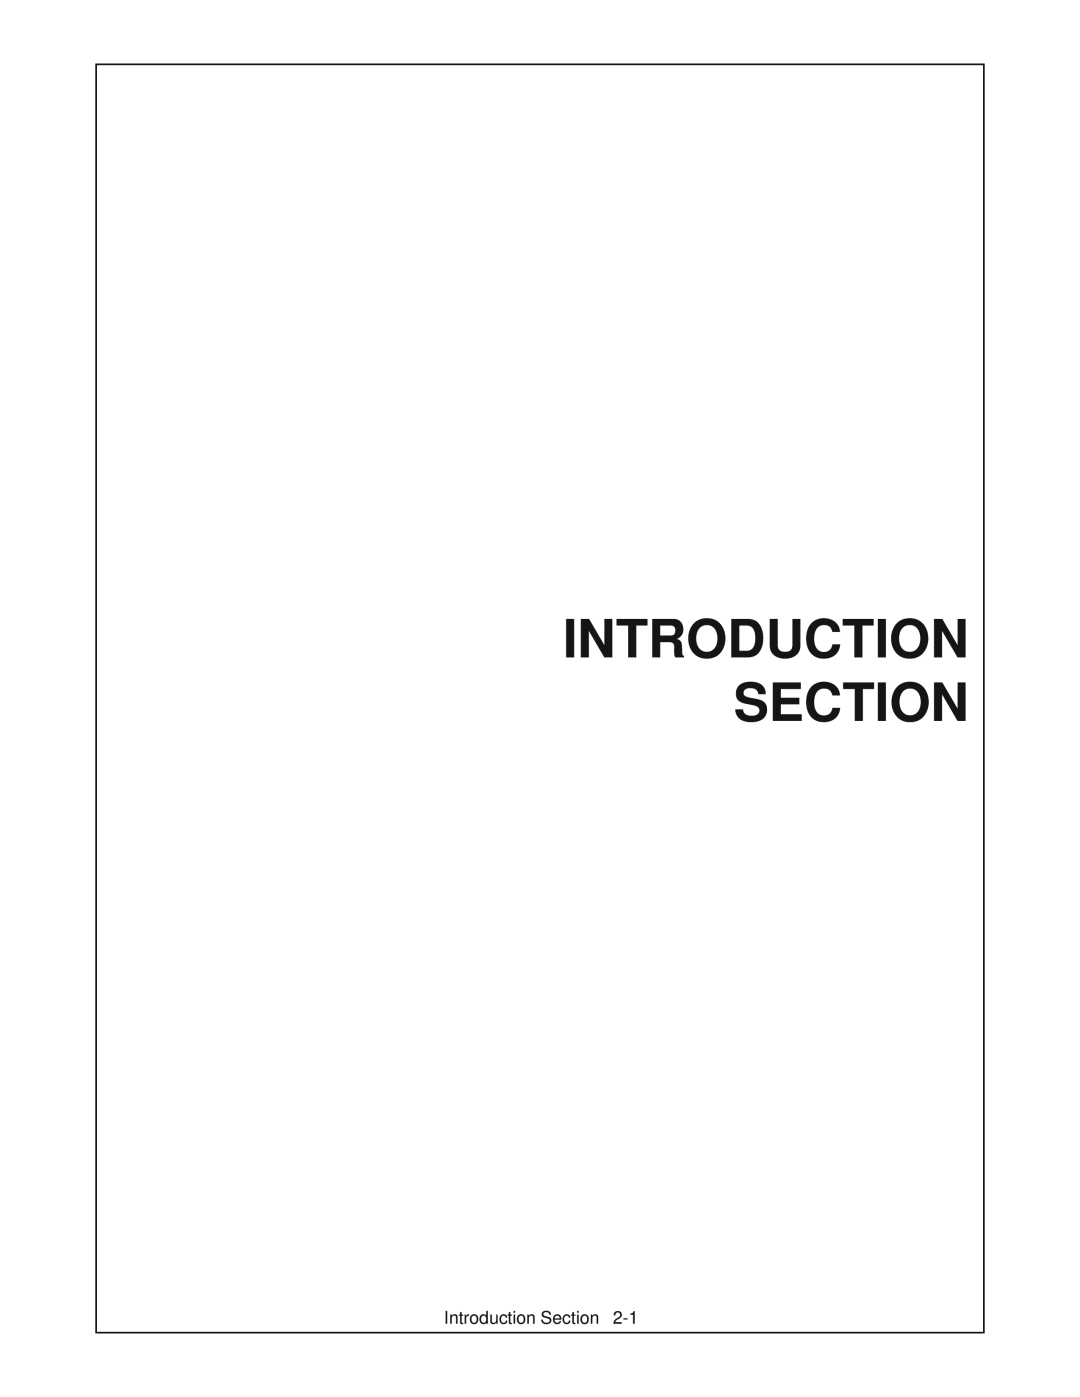 Servis-Rhino DM124, DM82, DM95, DM112 manual Introduction Section 